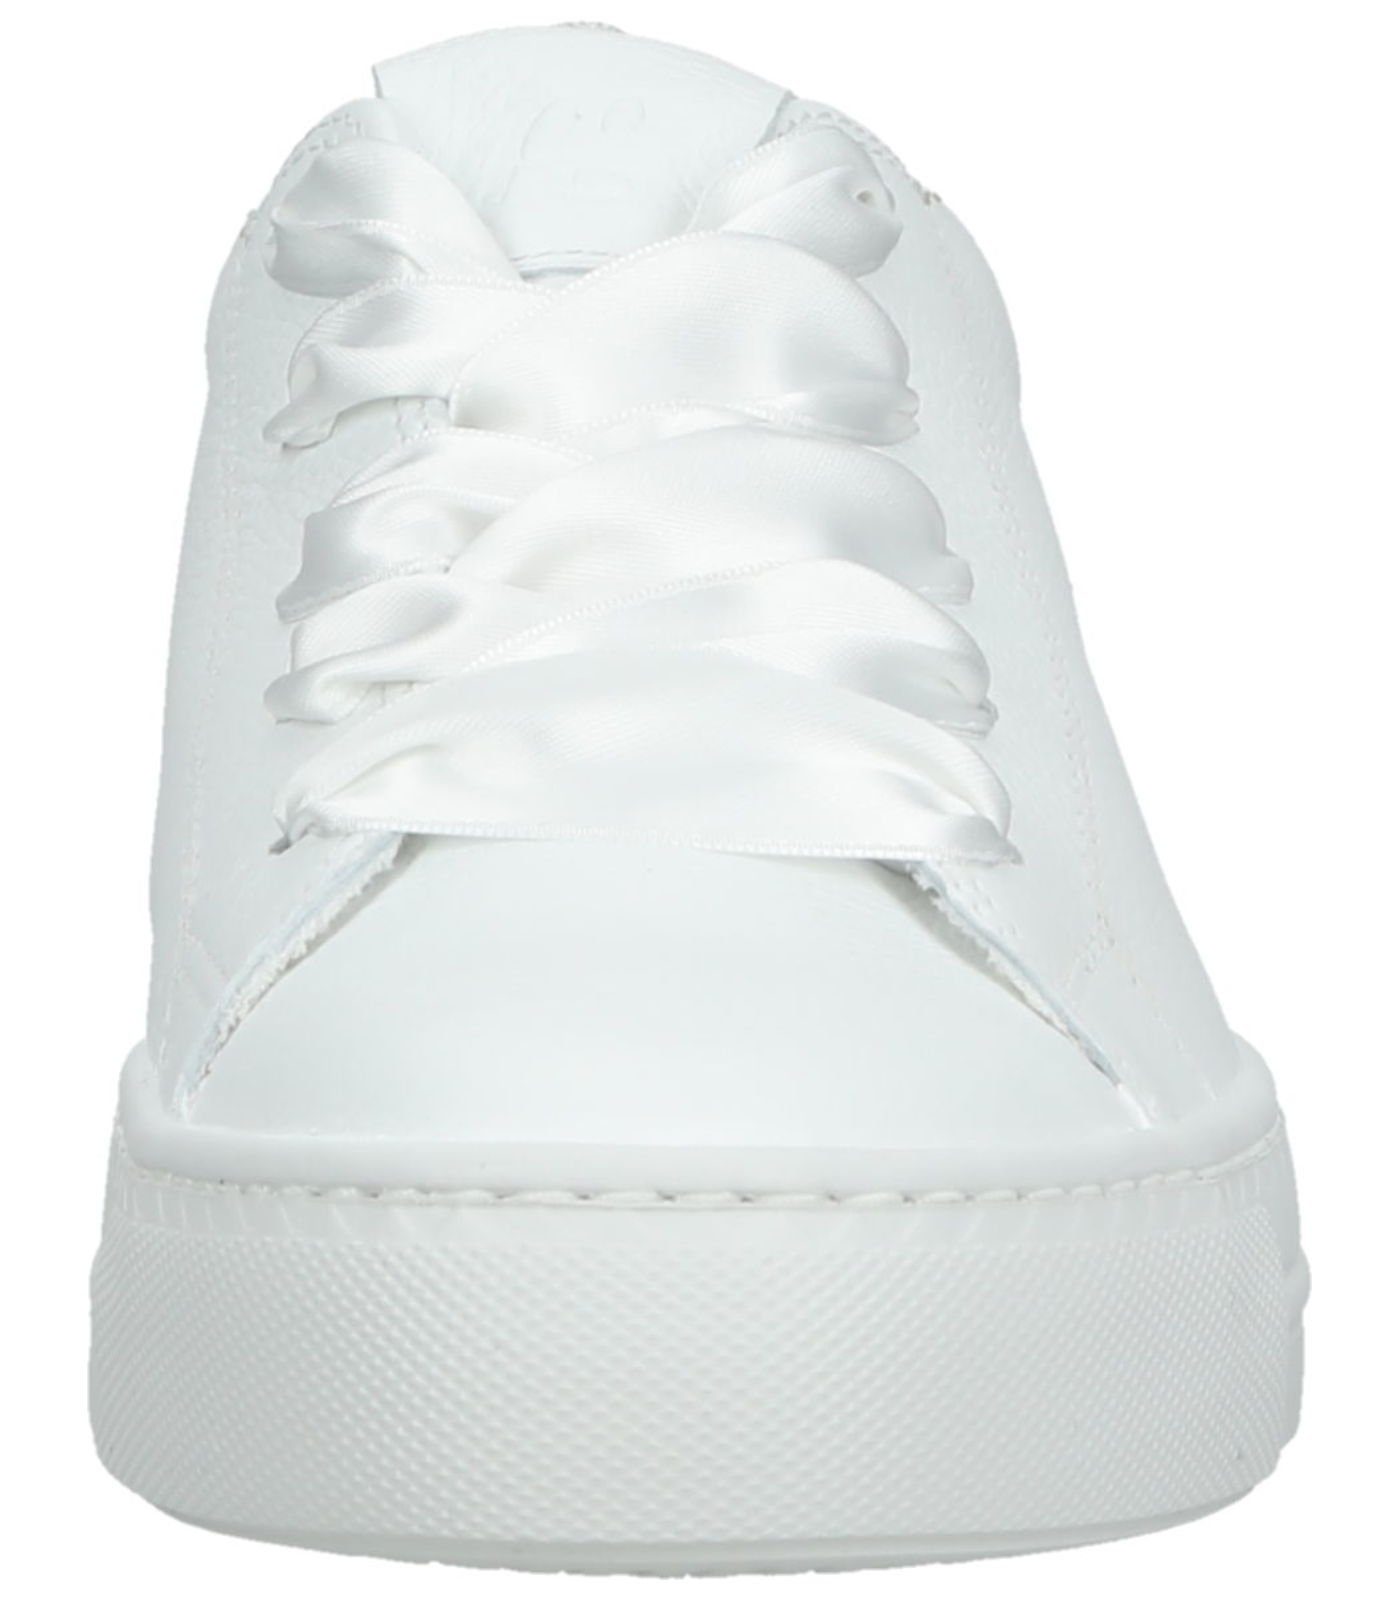 Paul Glattleder Green Sneaker white/clay Sneaker